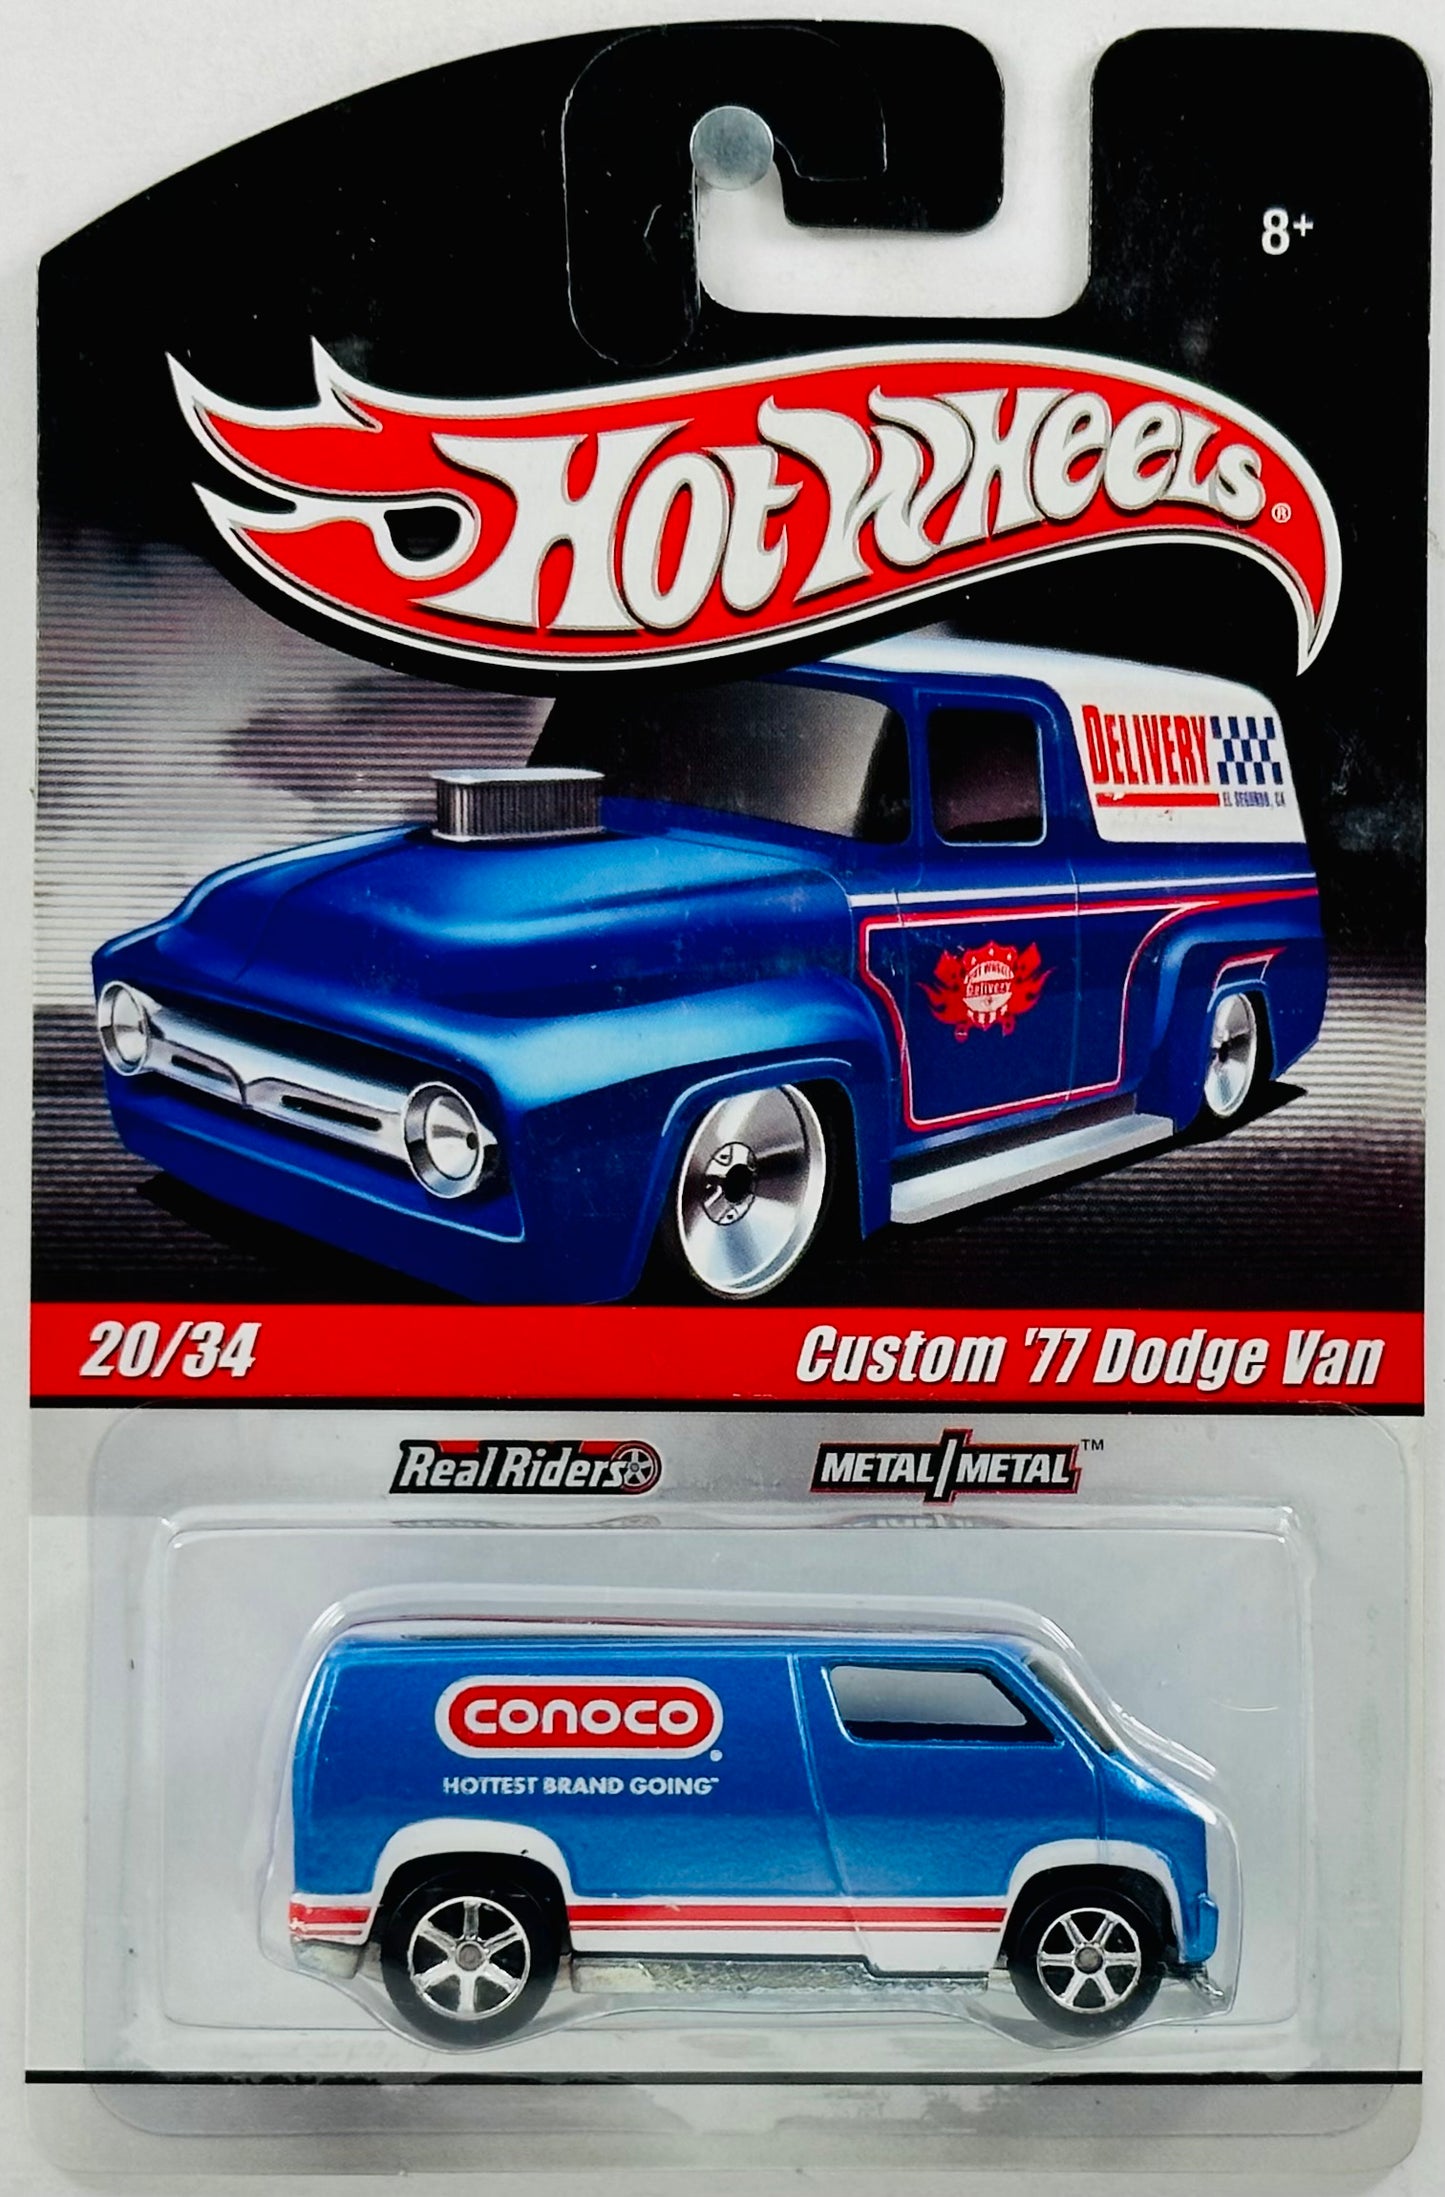 Hot Wheels 2010 - Delivery: Slick Rides # 20/34 - Custom '77 Dodge Van - Metalflake Blue - 'Conoco' - Metal/Metal & Real Riders